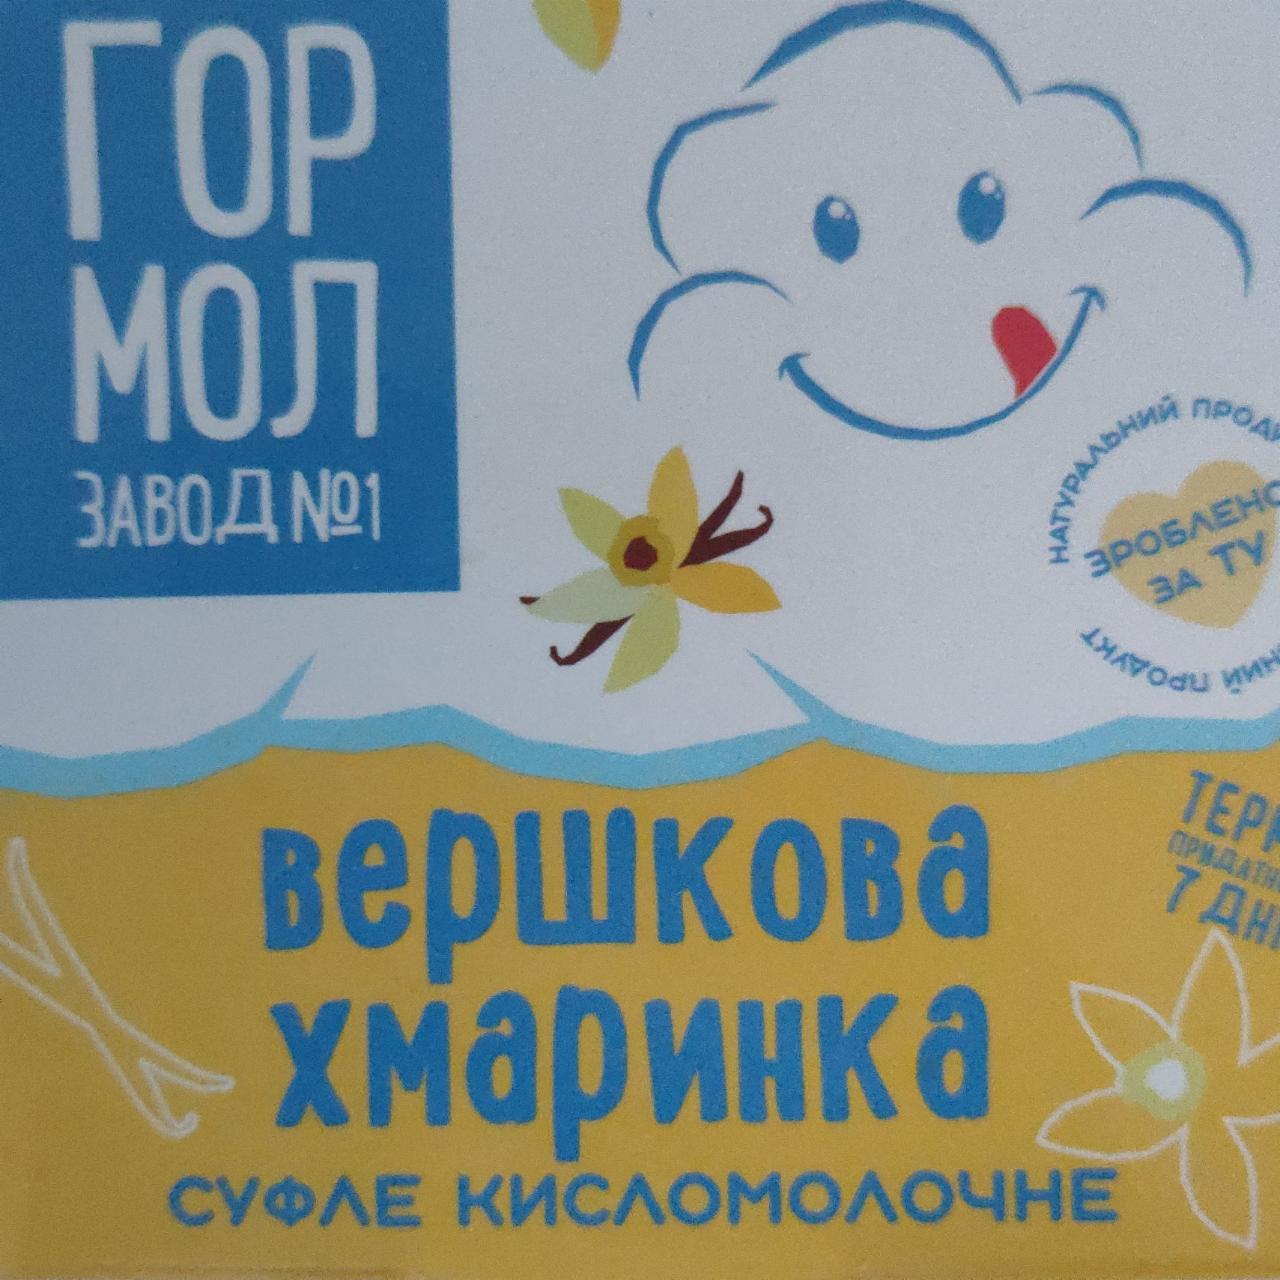 Фото - суфле кисломолочное хмарынка Гормолзавод №1